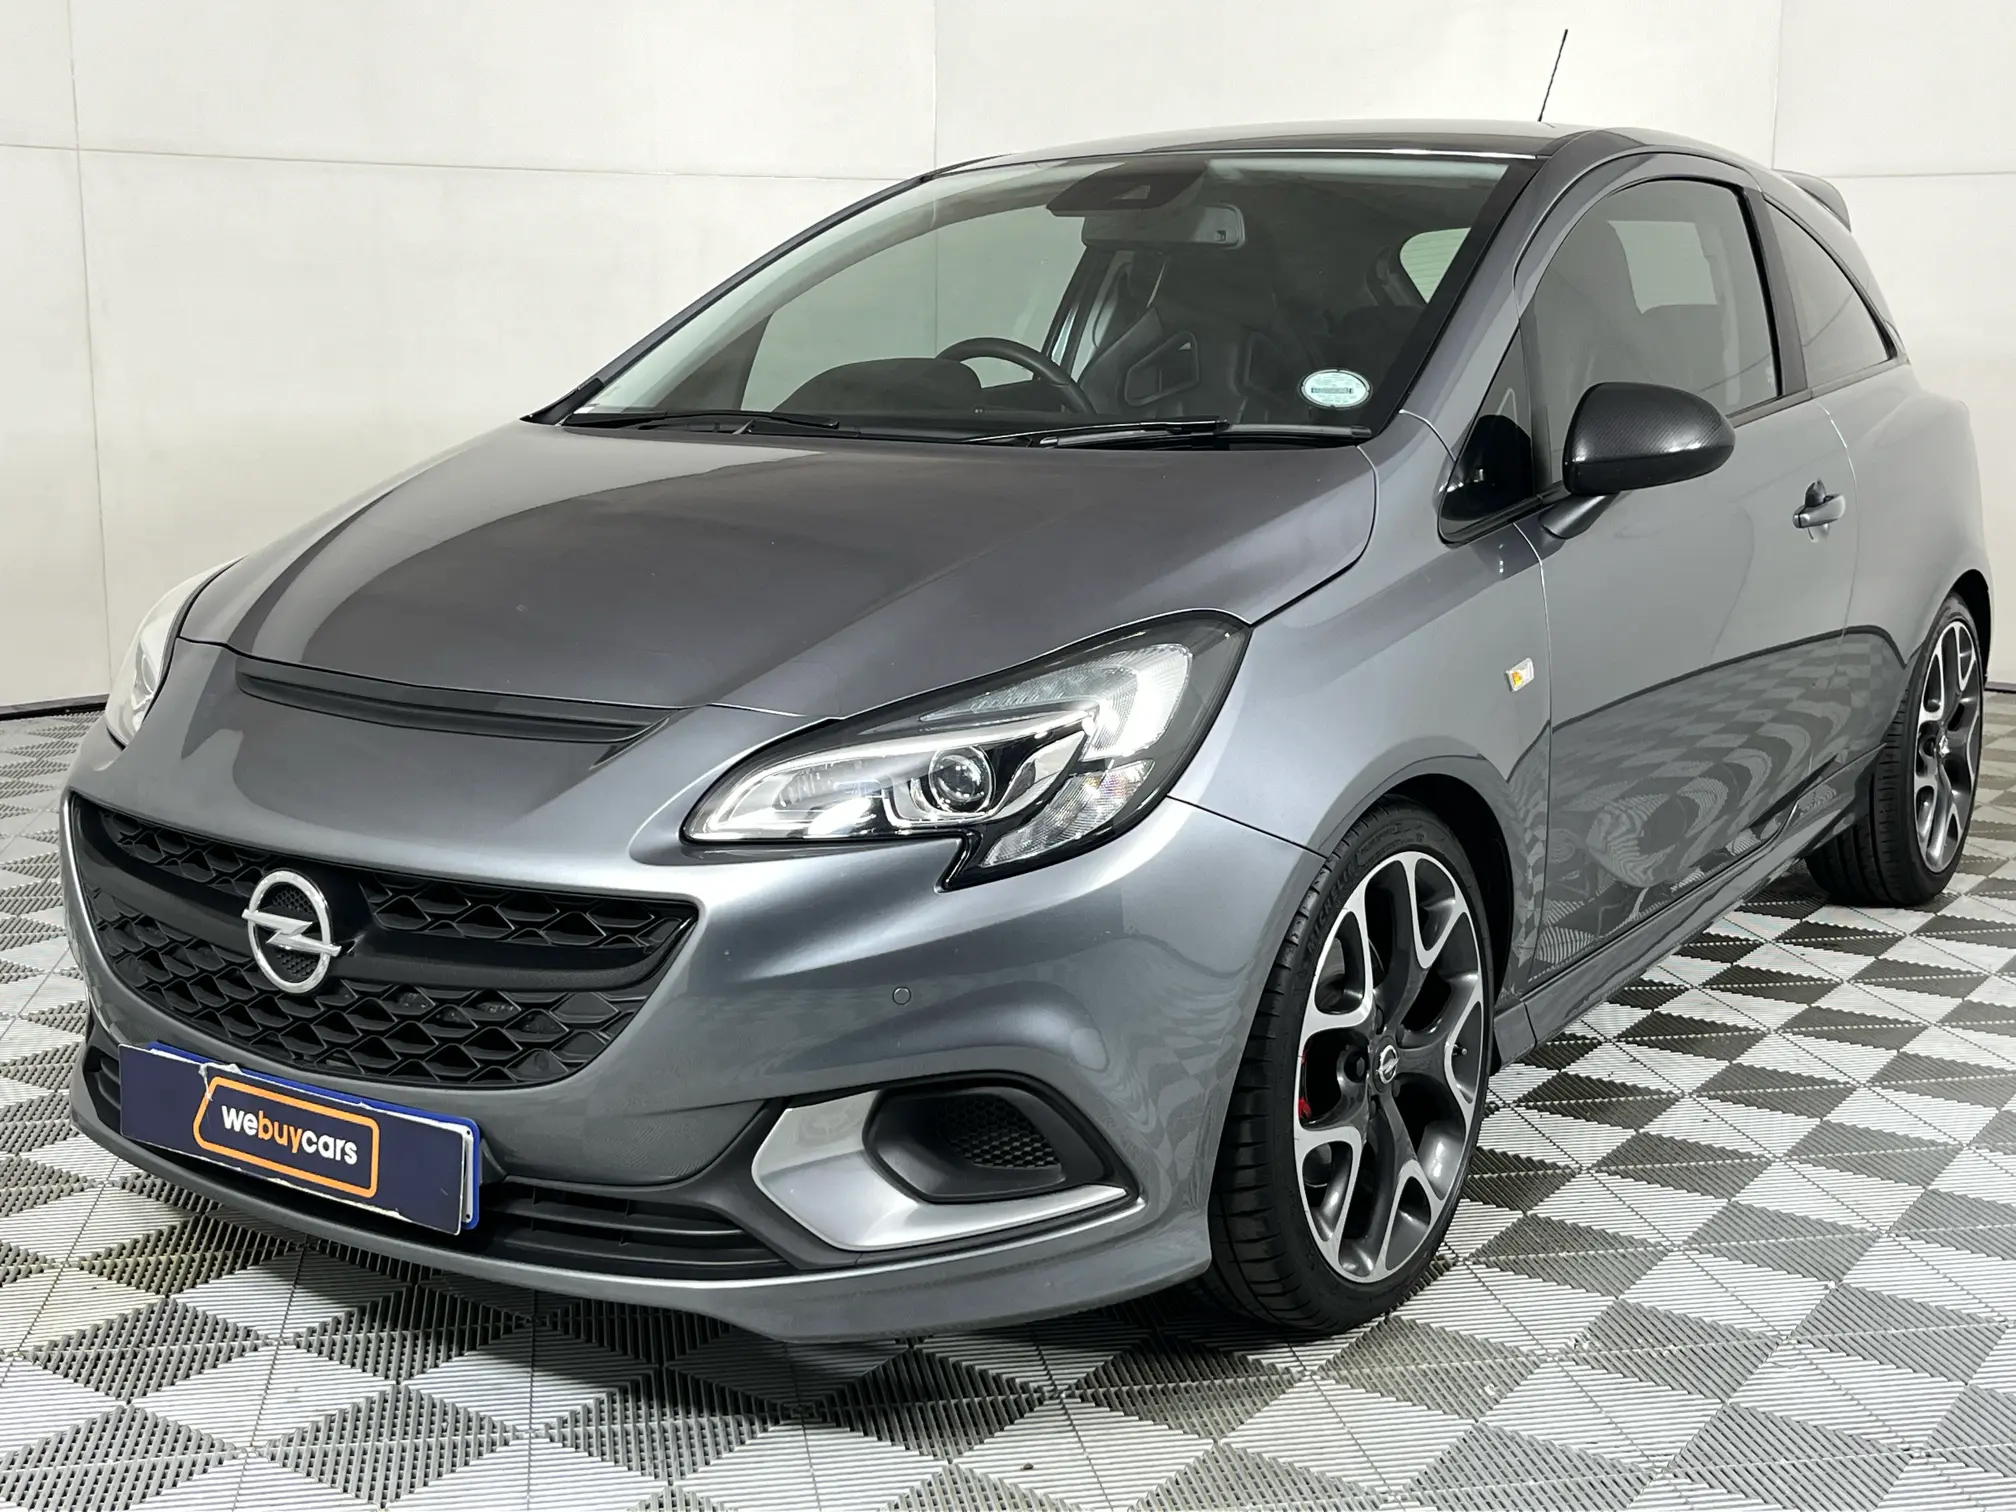 2019 Opel Corsa GSI 1.4T (3dr)